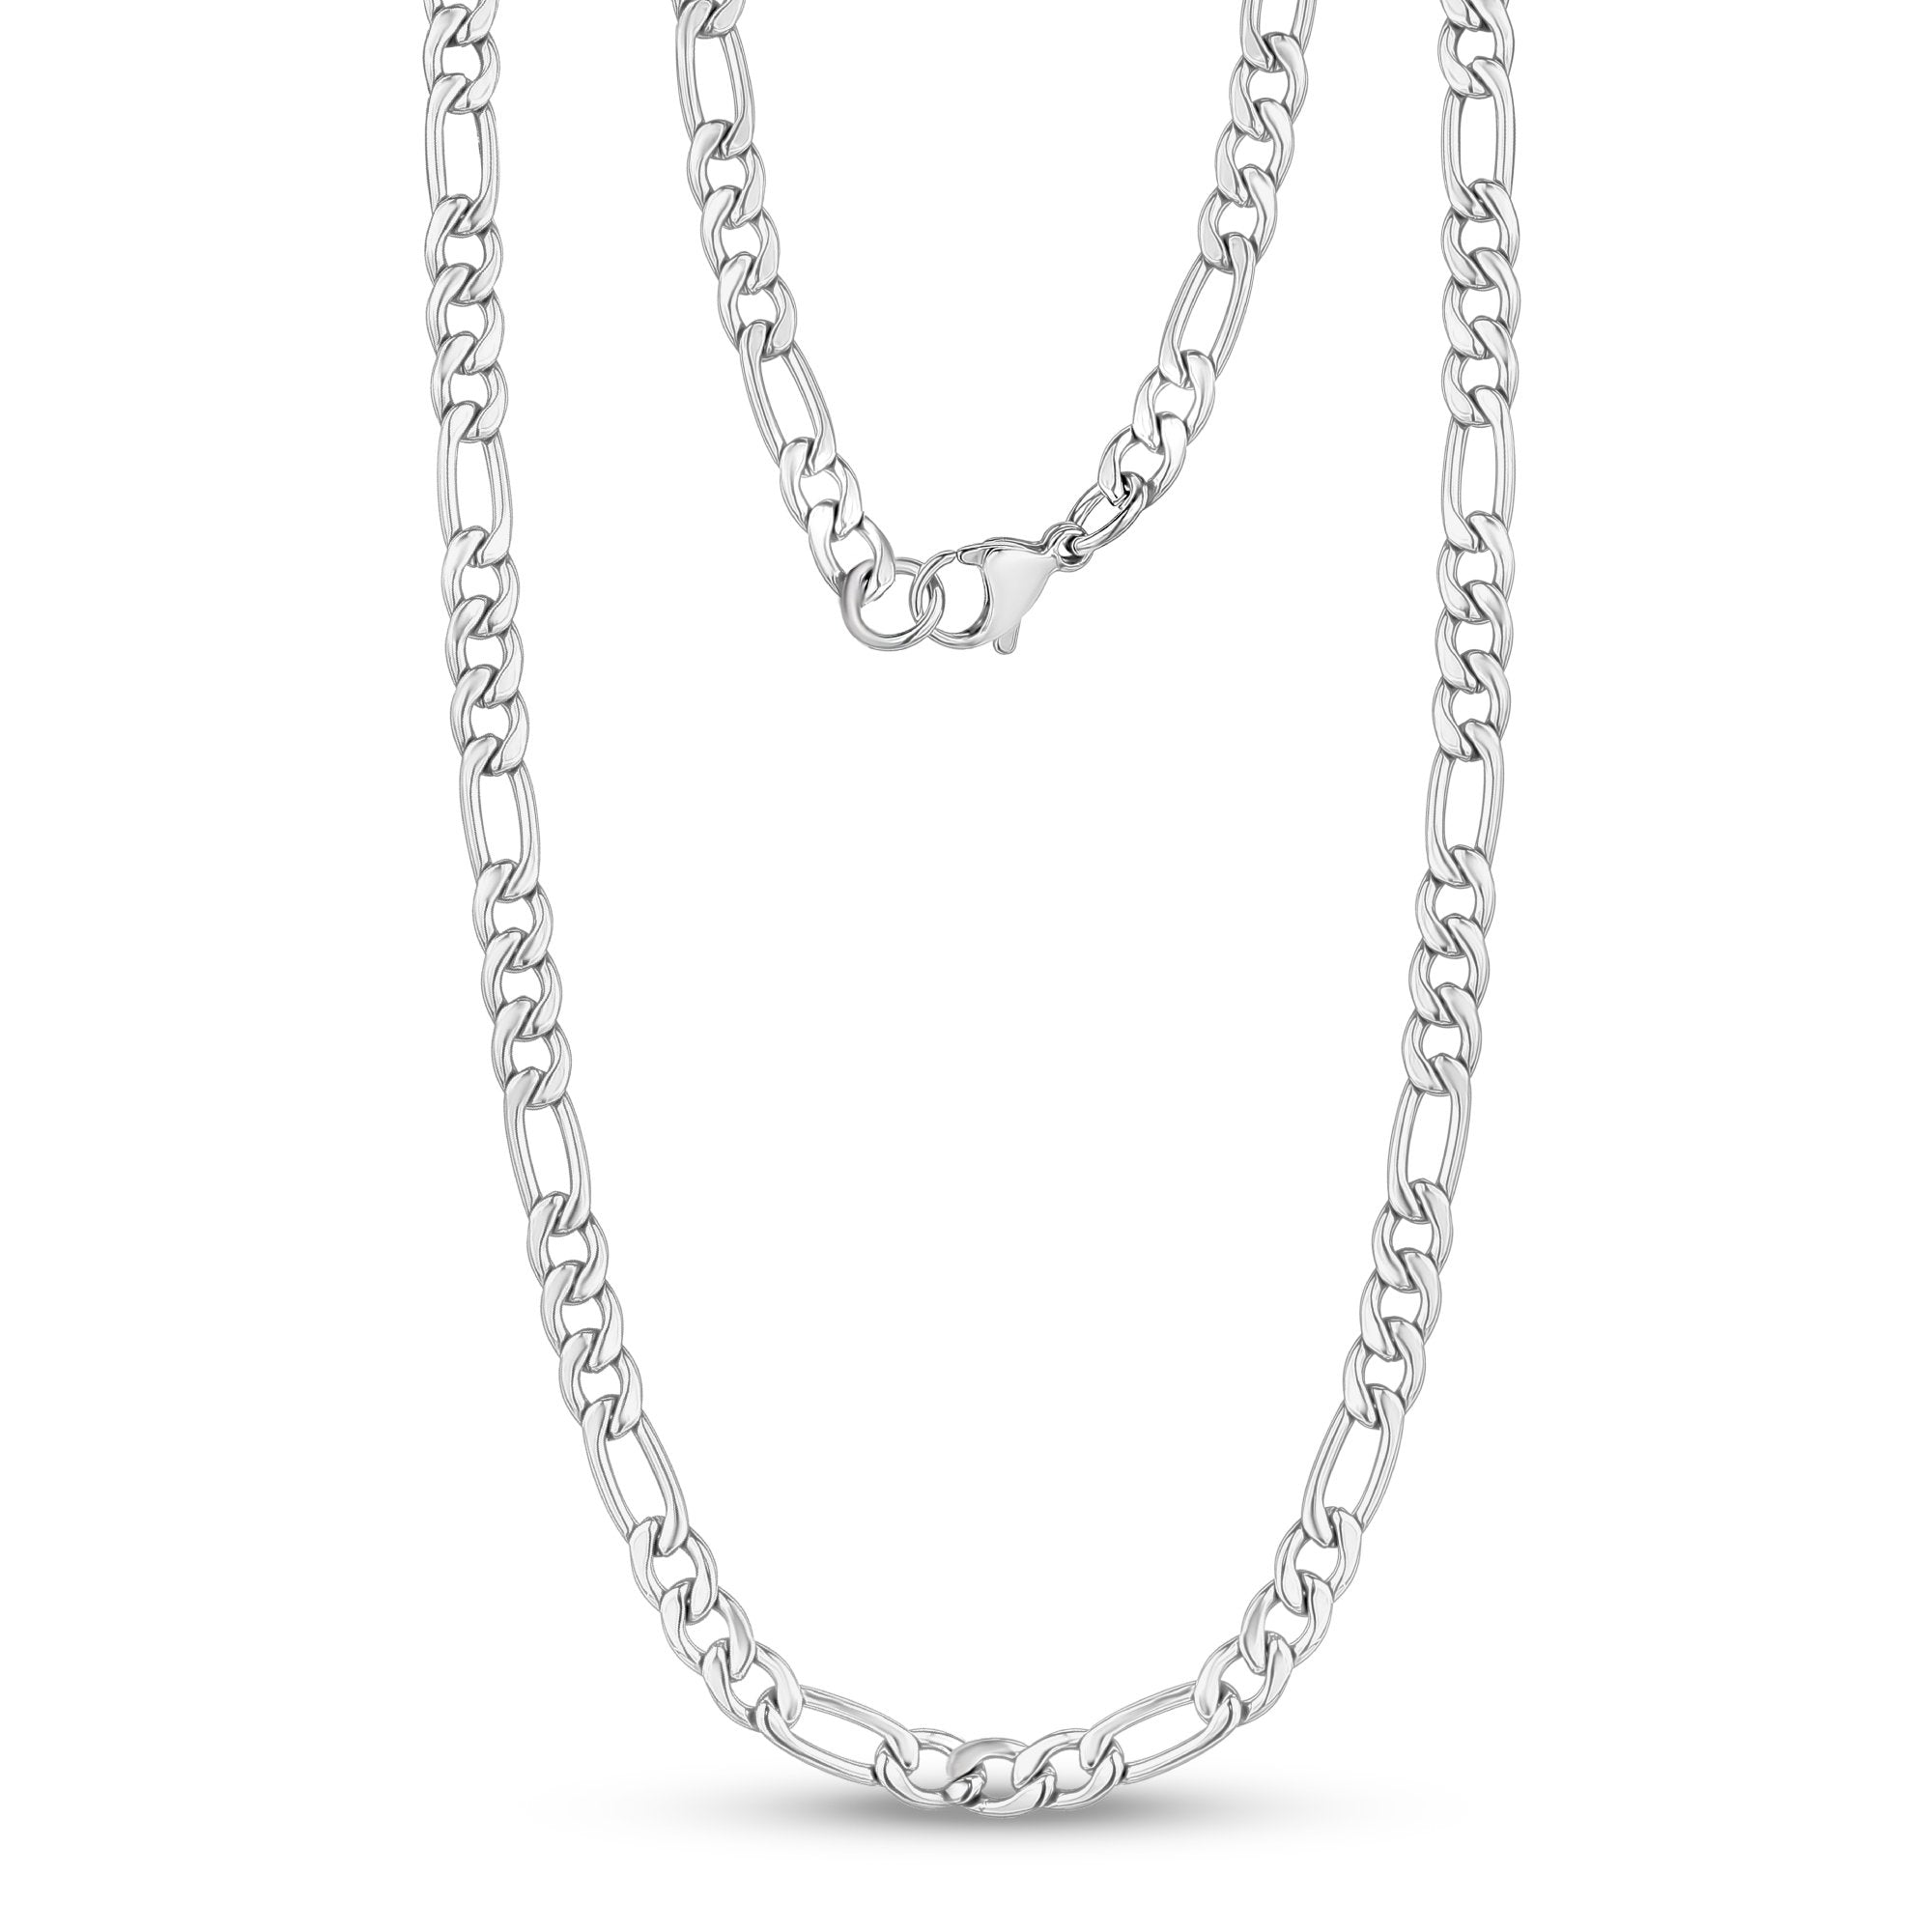 Nitrogen Stainless Steel Men's Link Necklace Chain